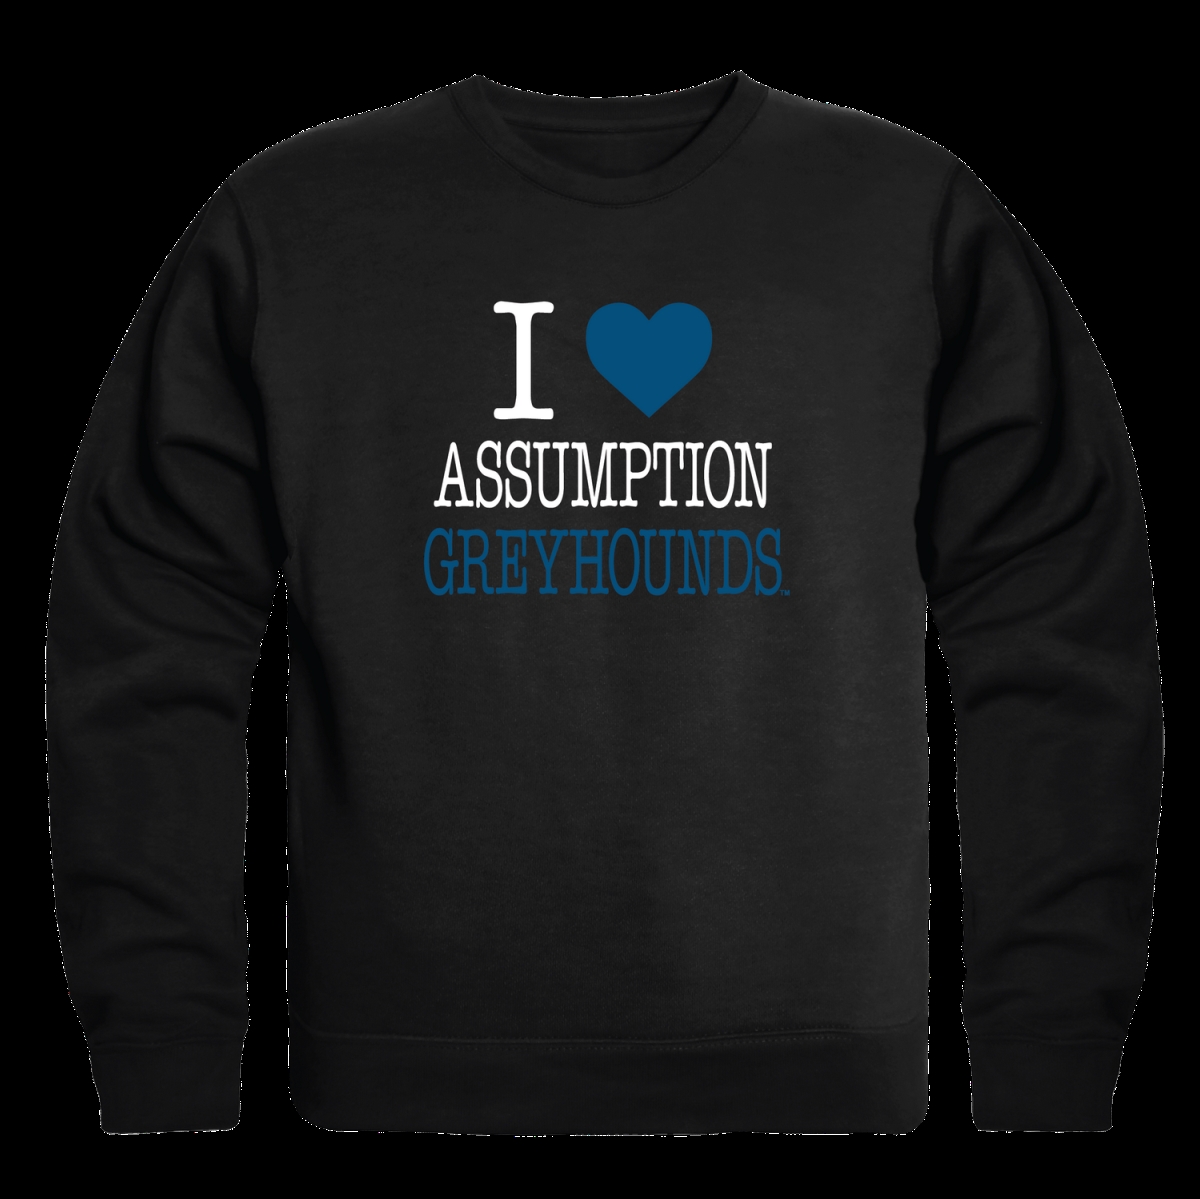 W Republic 552-734-BLK-01 Assumption University Greyhounds I Love Crewneck Sweatshirt&#44; Black - Small